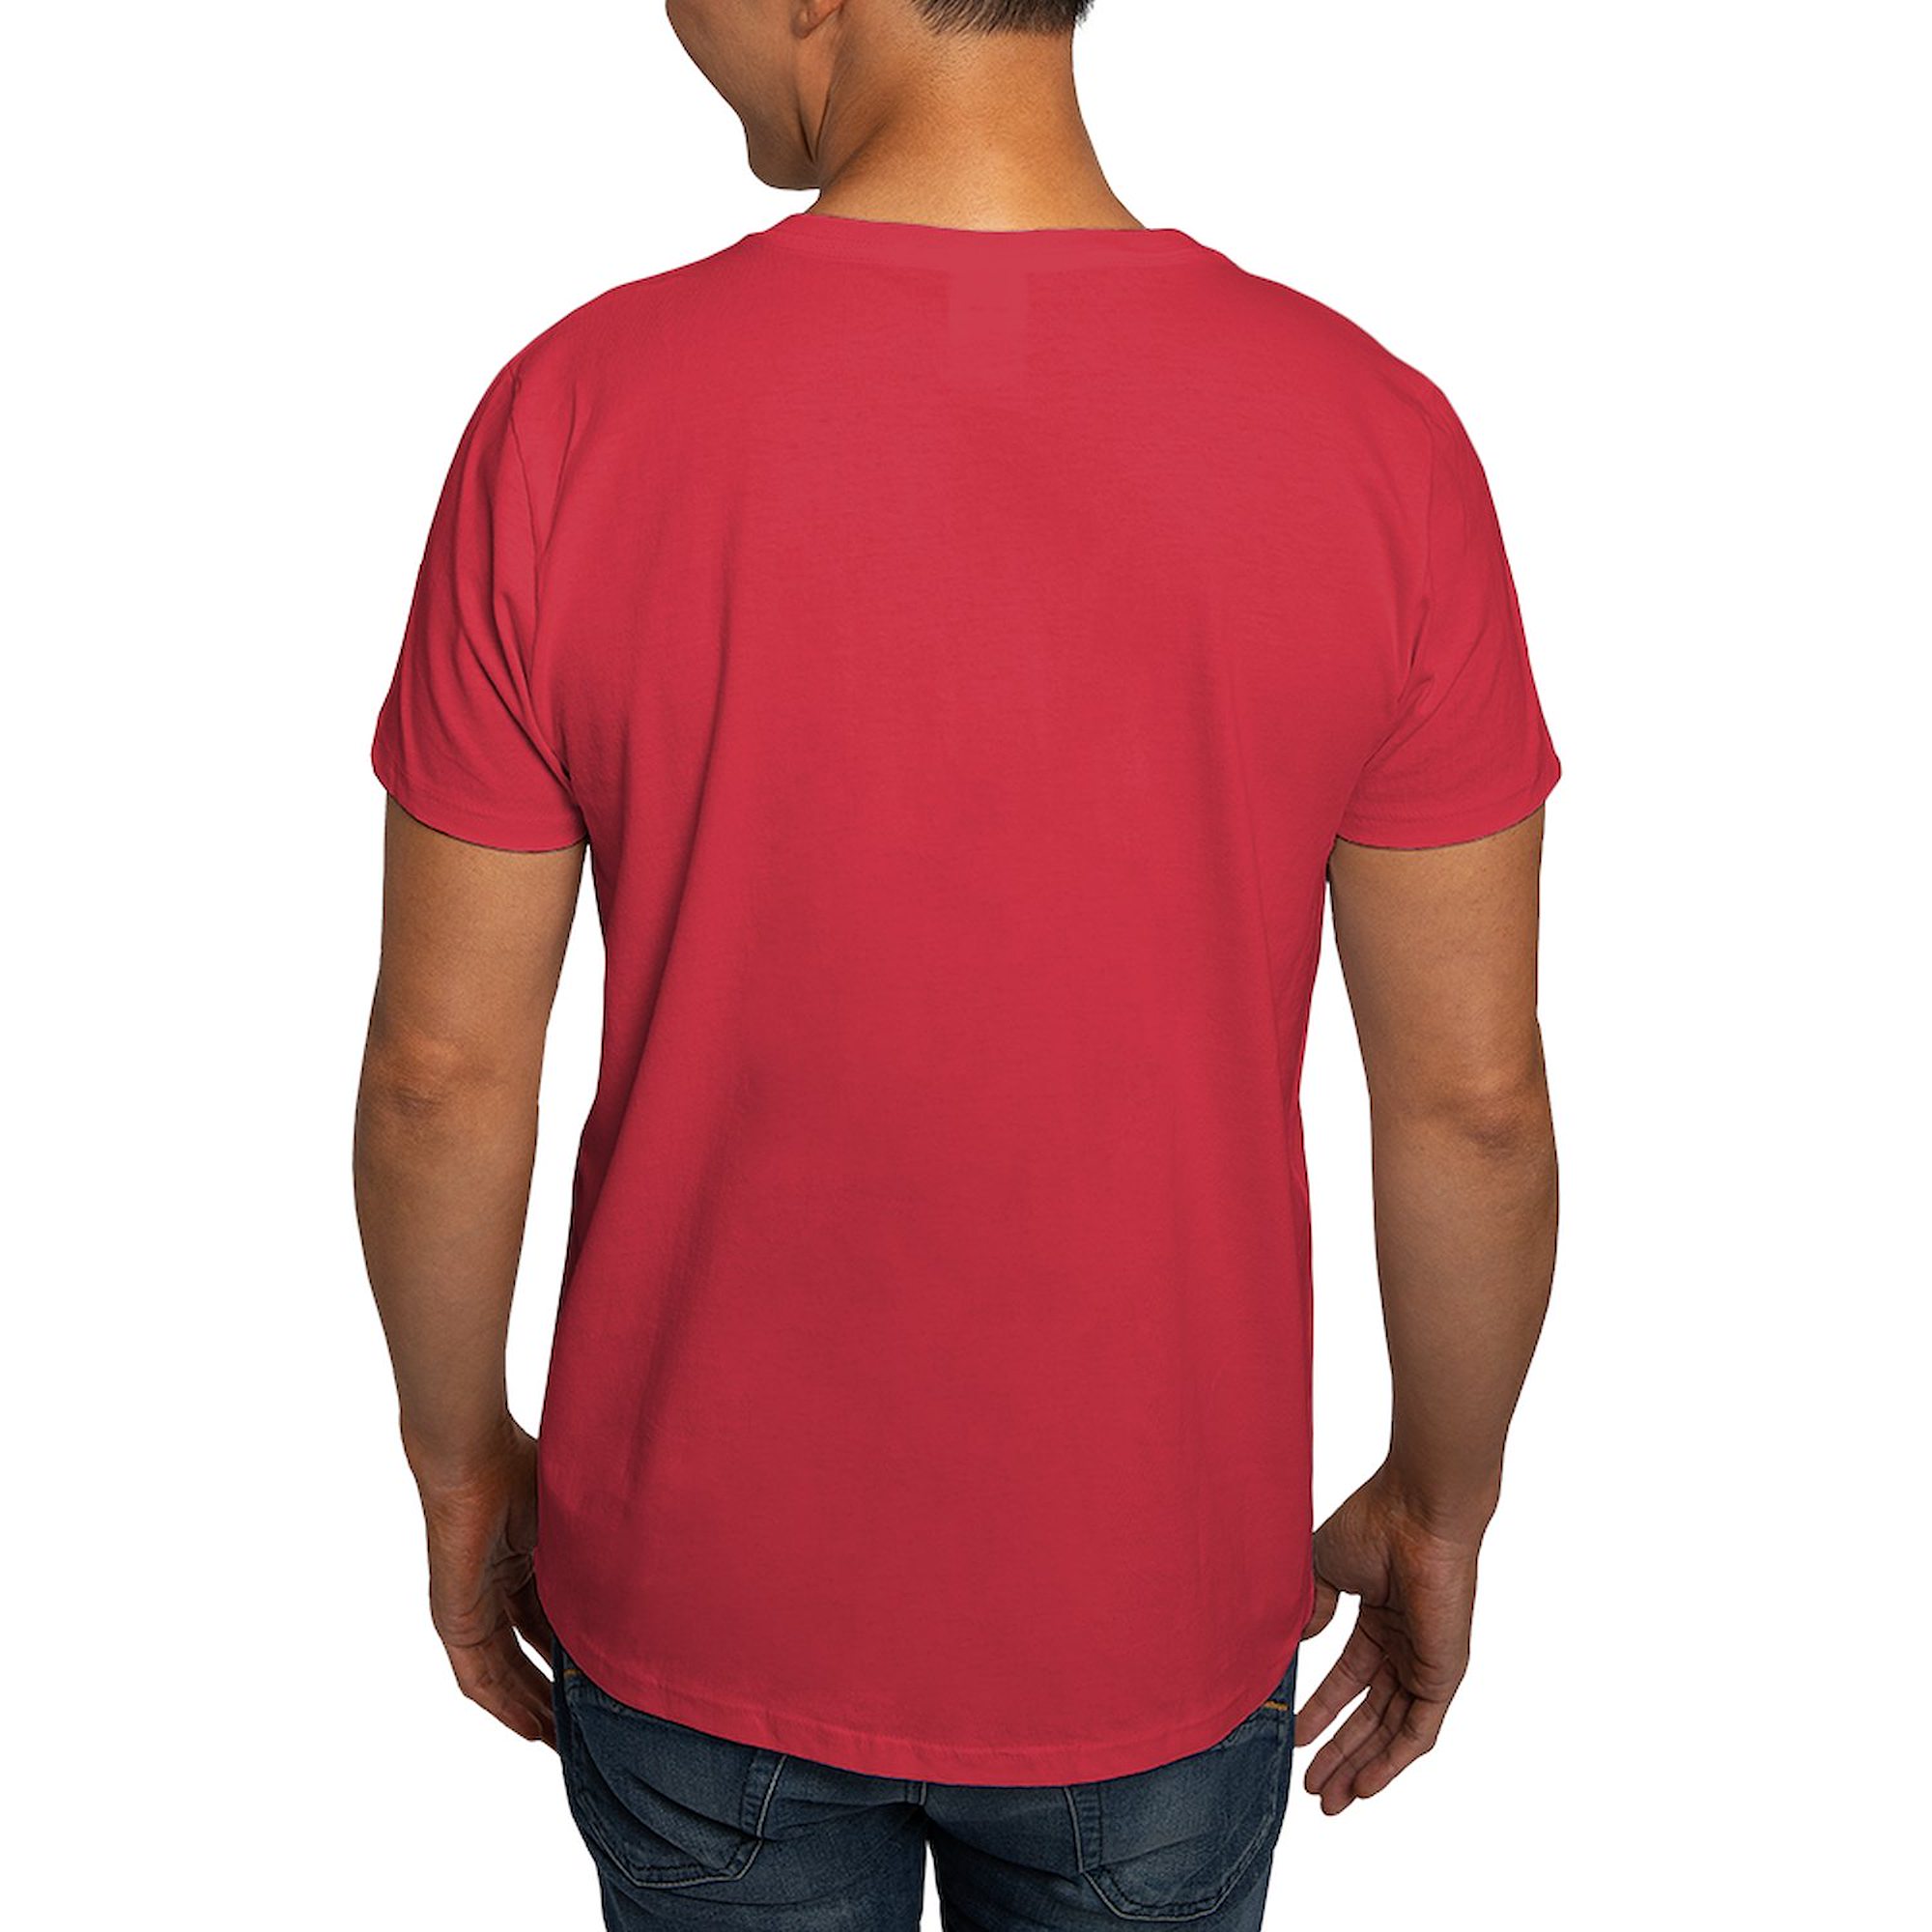 CafePress - My Wife's Battle Is My Battle Dark T Shirt - 100% Cotton T-Shirt - image 2 of 4